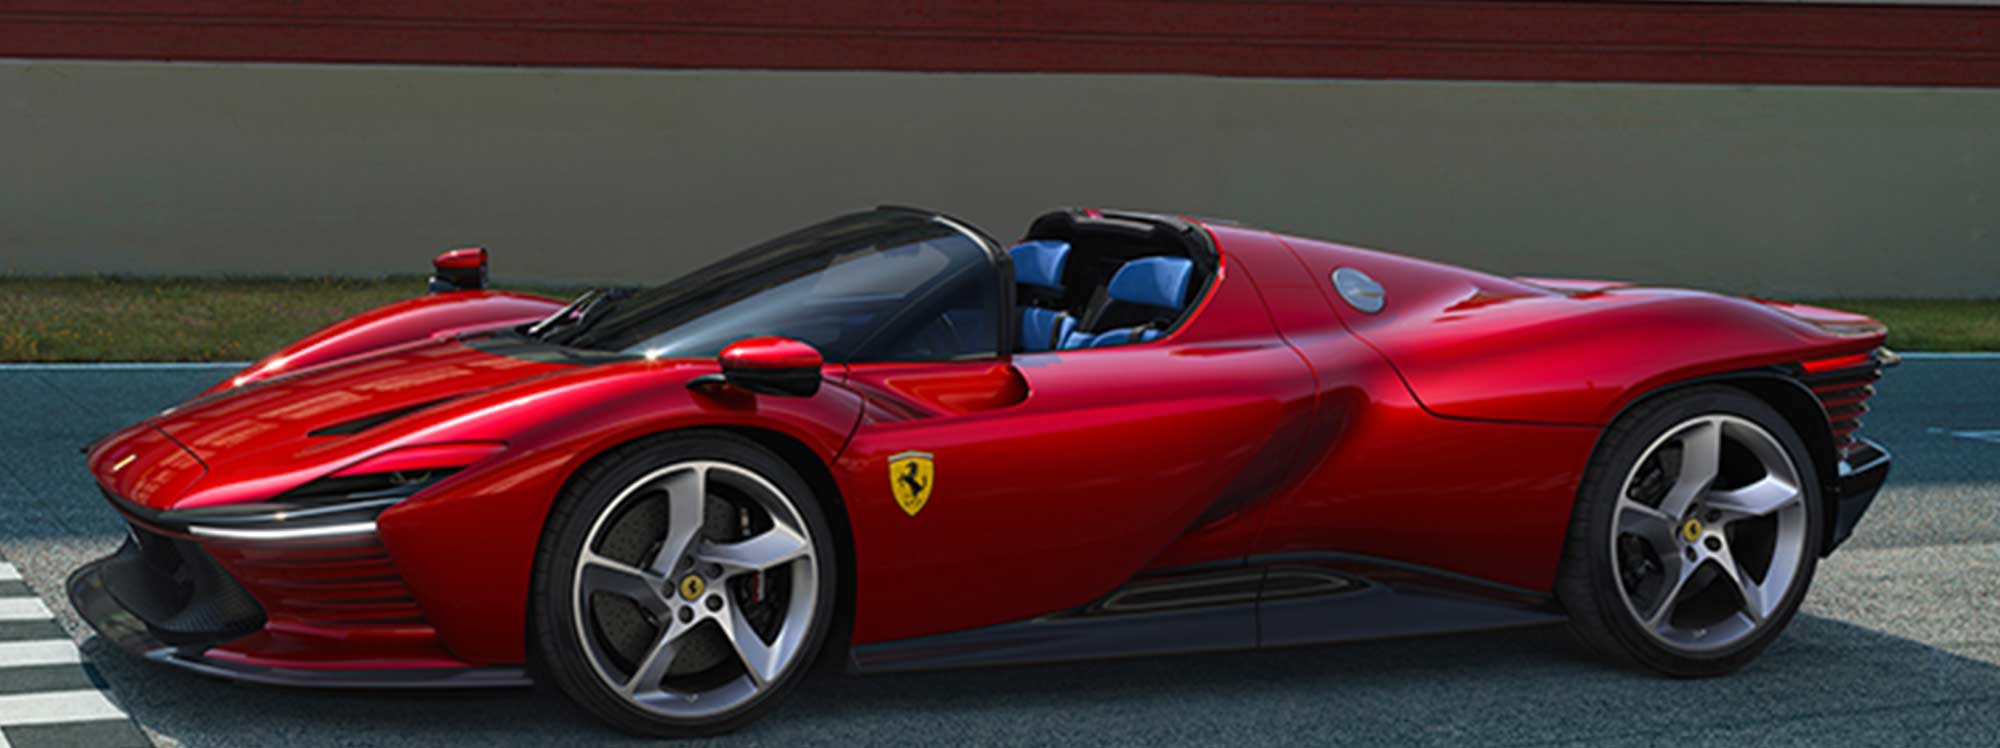 Ferrari: un nuevo modelo de la serie “Icona”